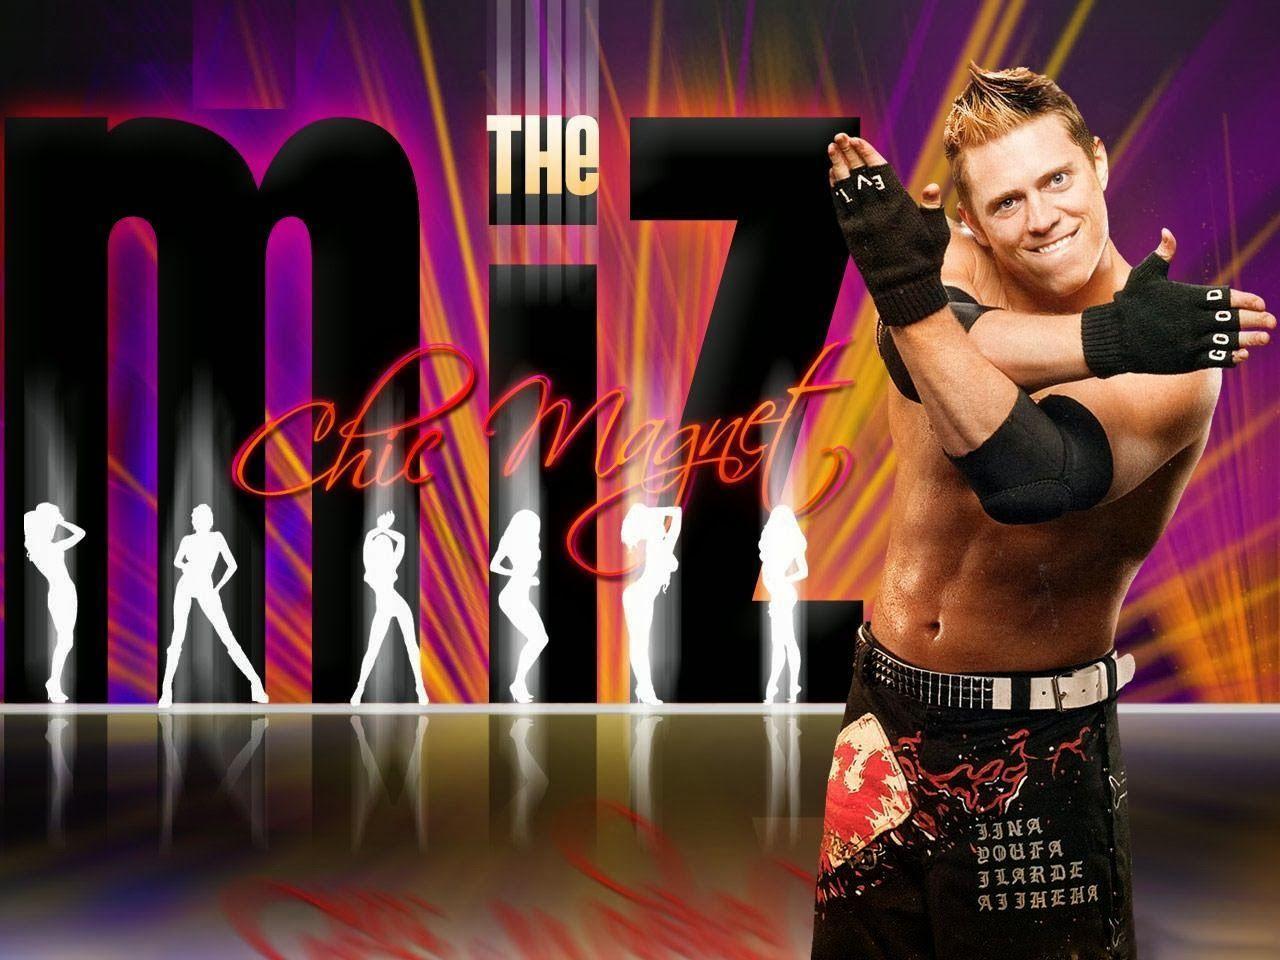 The Miz HD Wallpaper Free Download. WWE HD WALLPAPER FREE DOWNLOAD